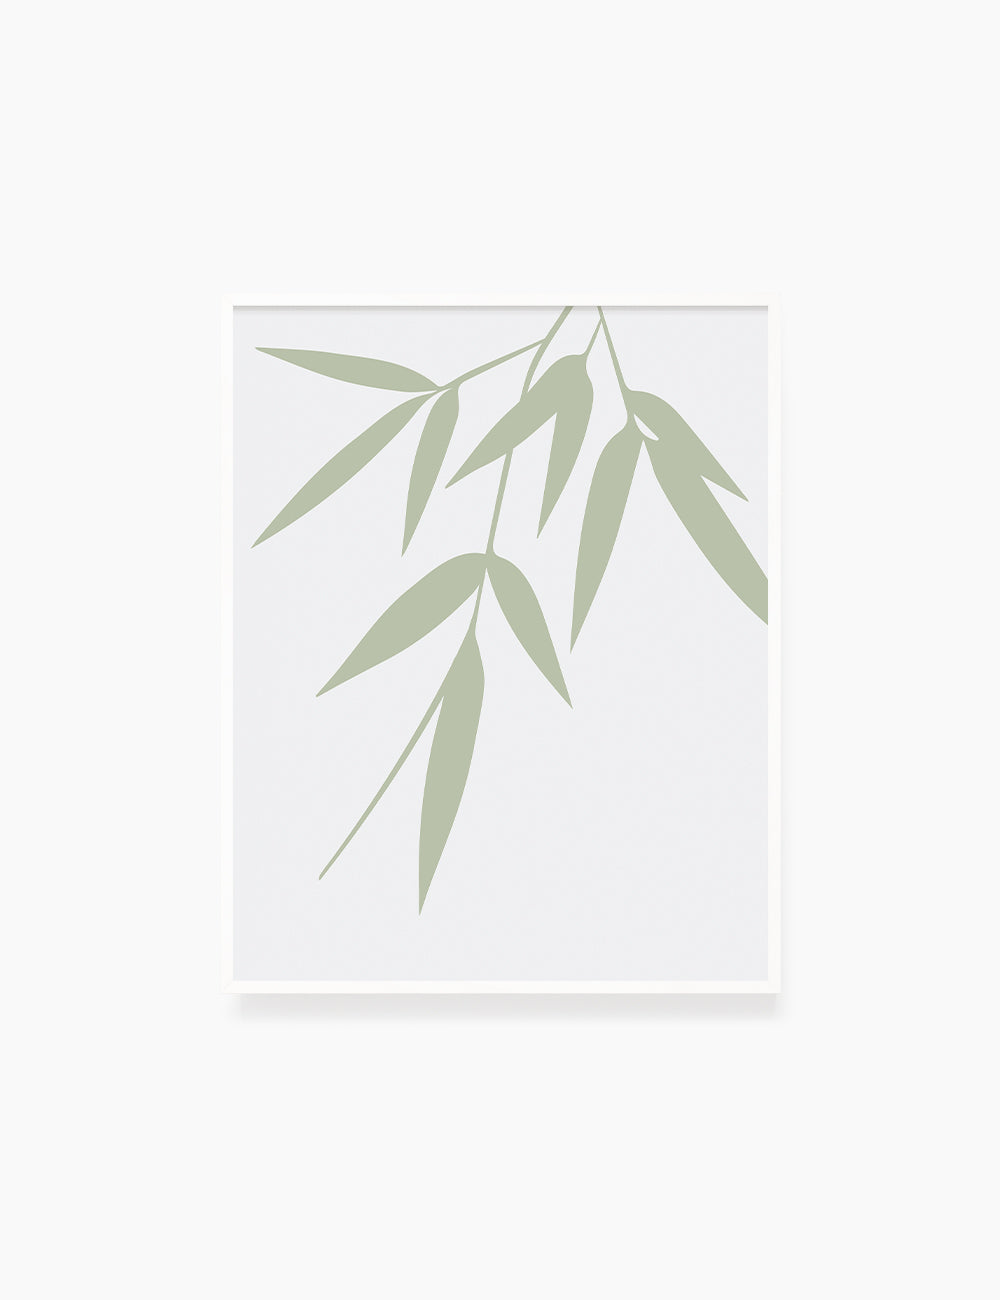 BAMBOO LEAVES. MINIMALIST BOTANICAL BOHO ART. GREEN. Minimal Aesthetic. Clean Design. Printable Wall Art Illustration. - PAPER MOON Art & Design